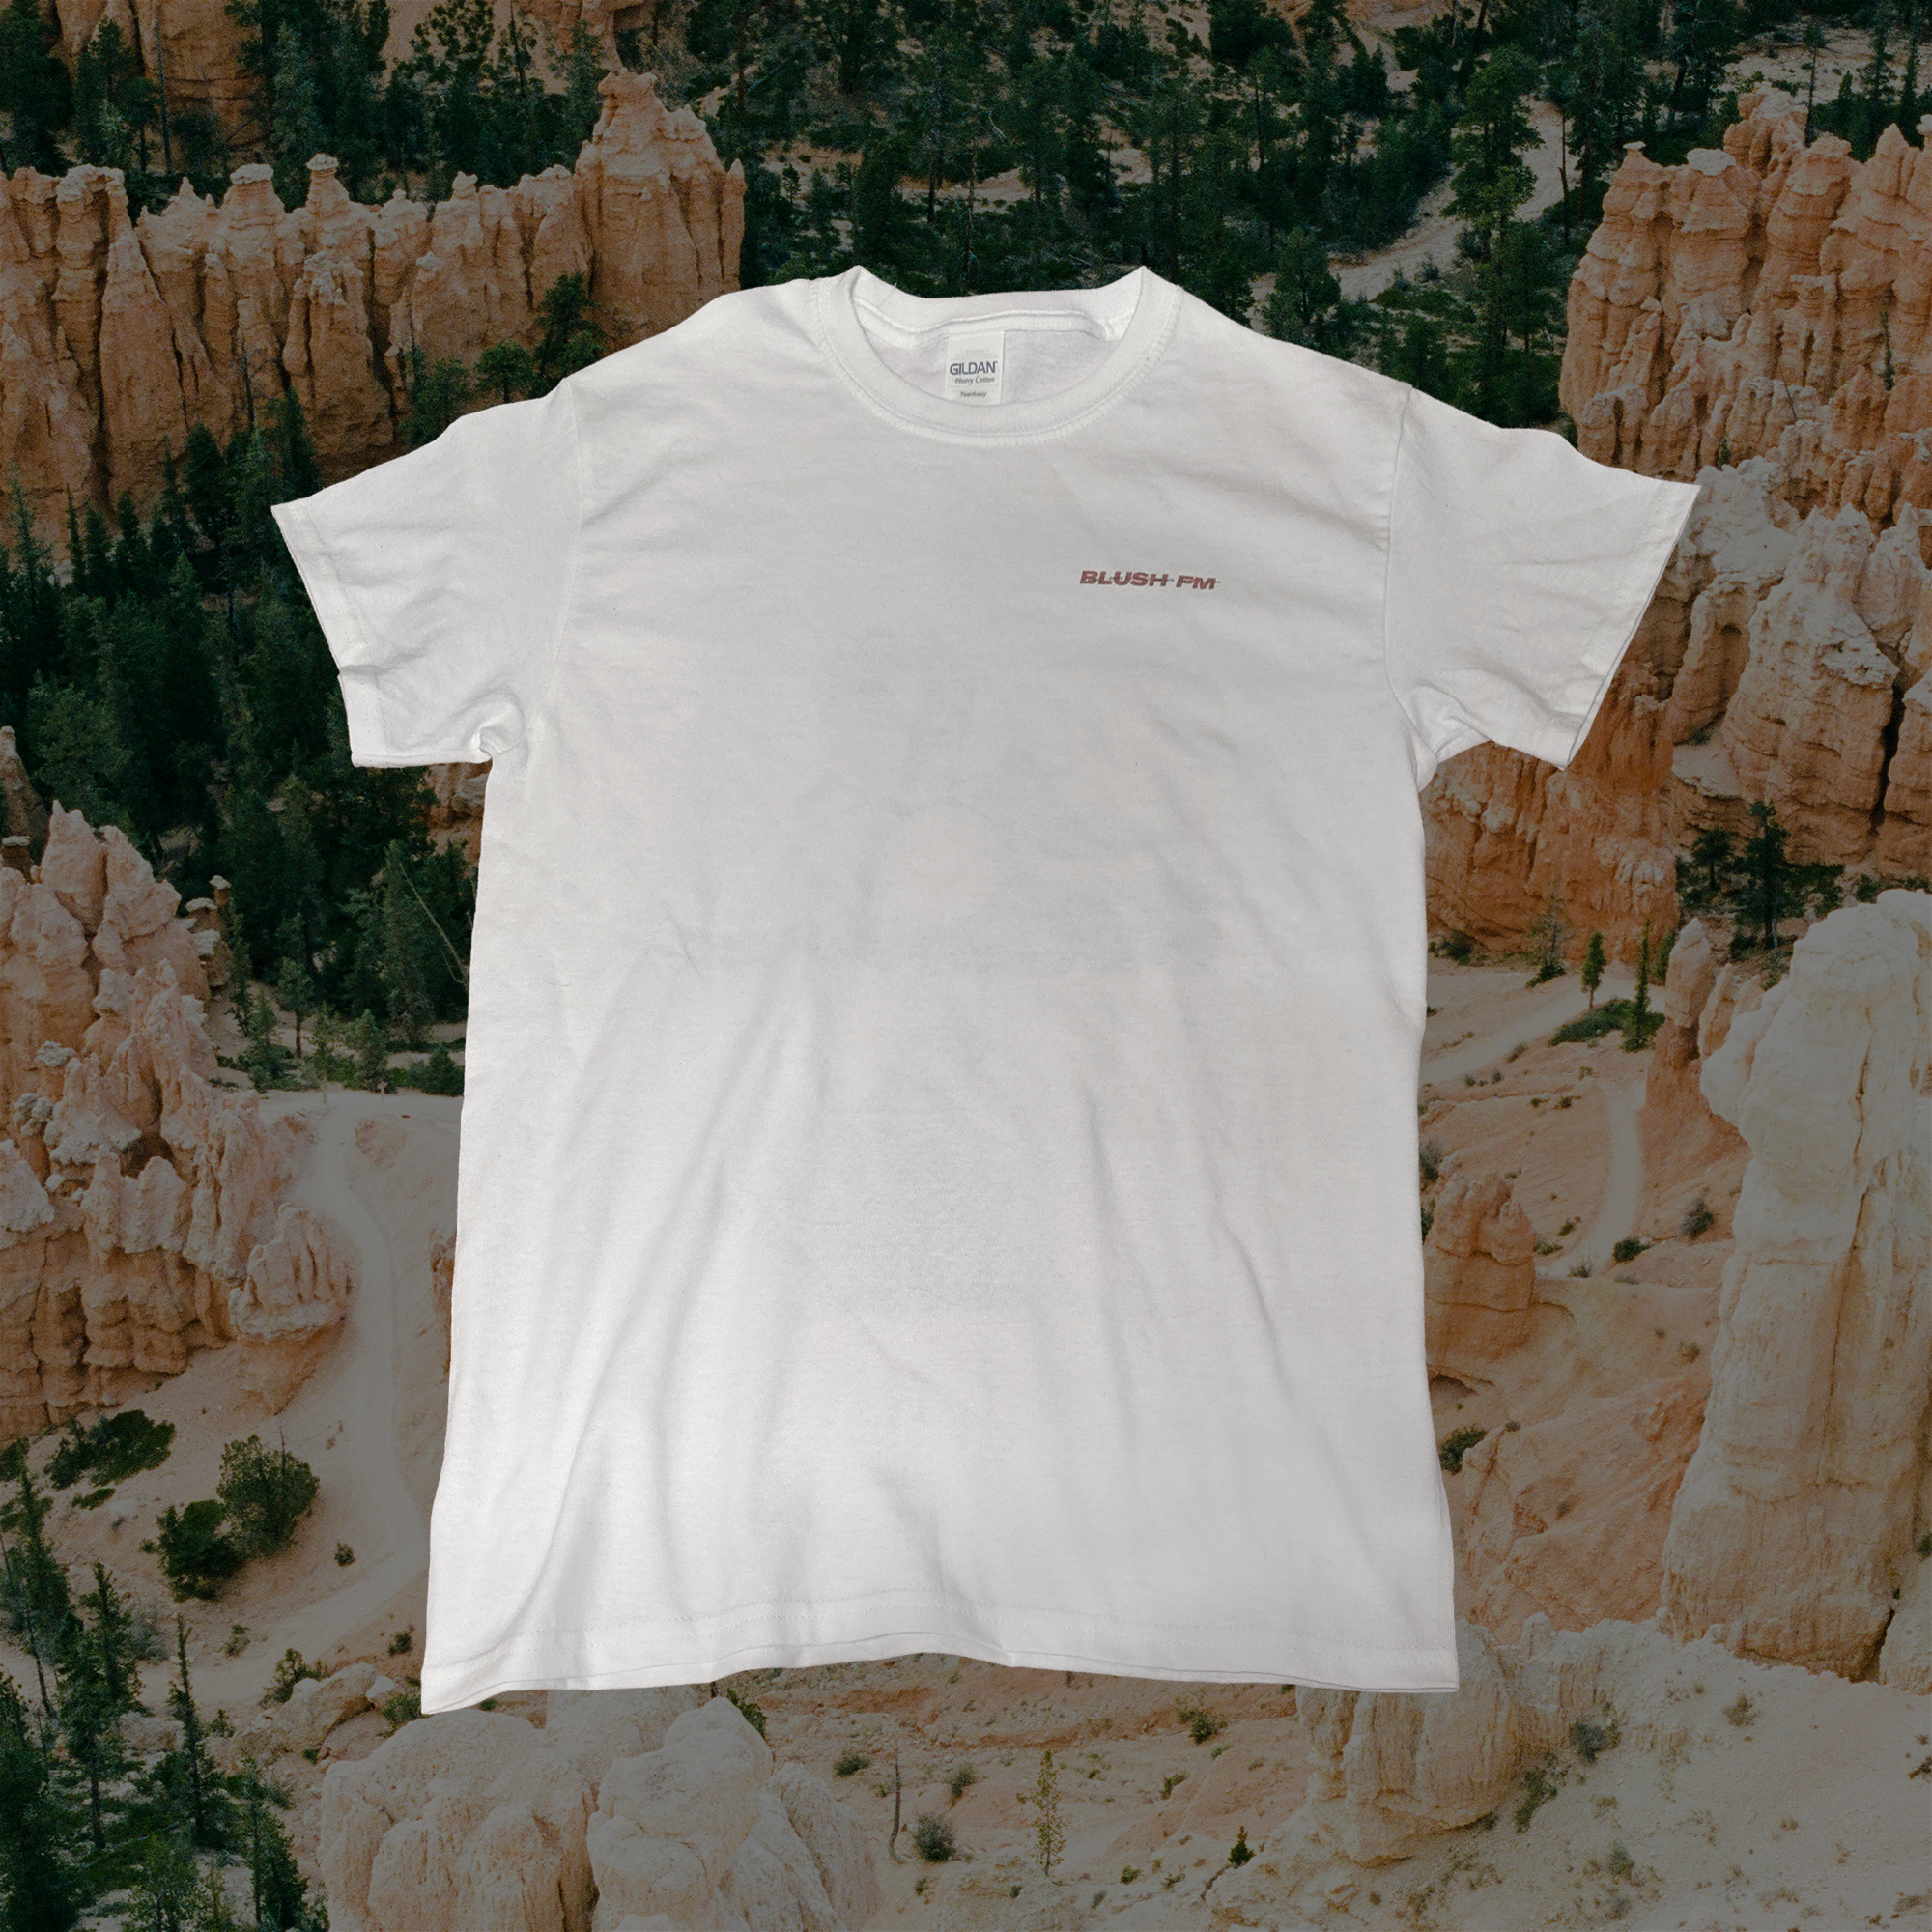 Blush FM - T-Shirt - White ( + Digital Download of Single Track "Move")